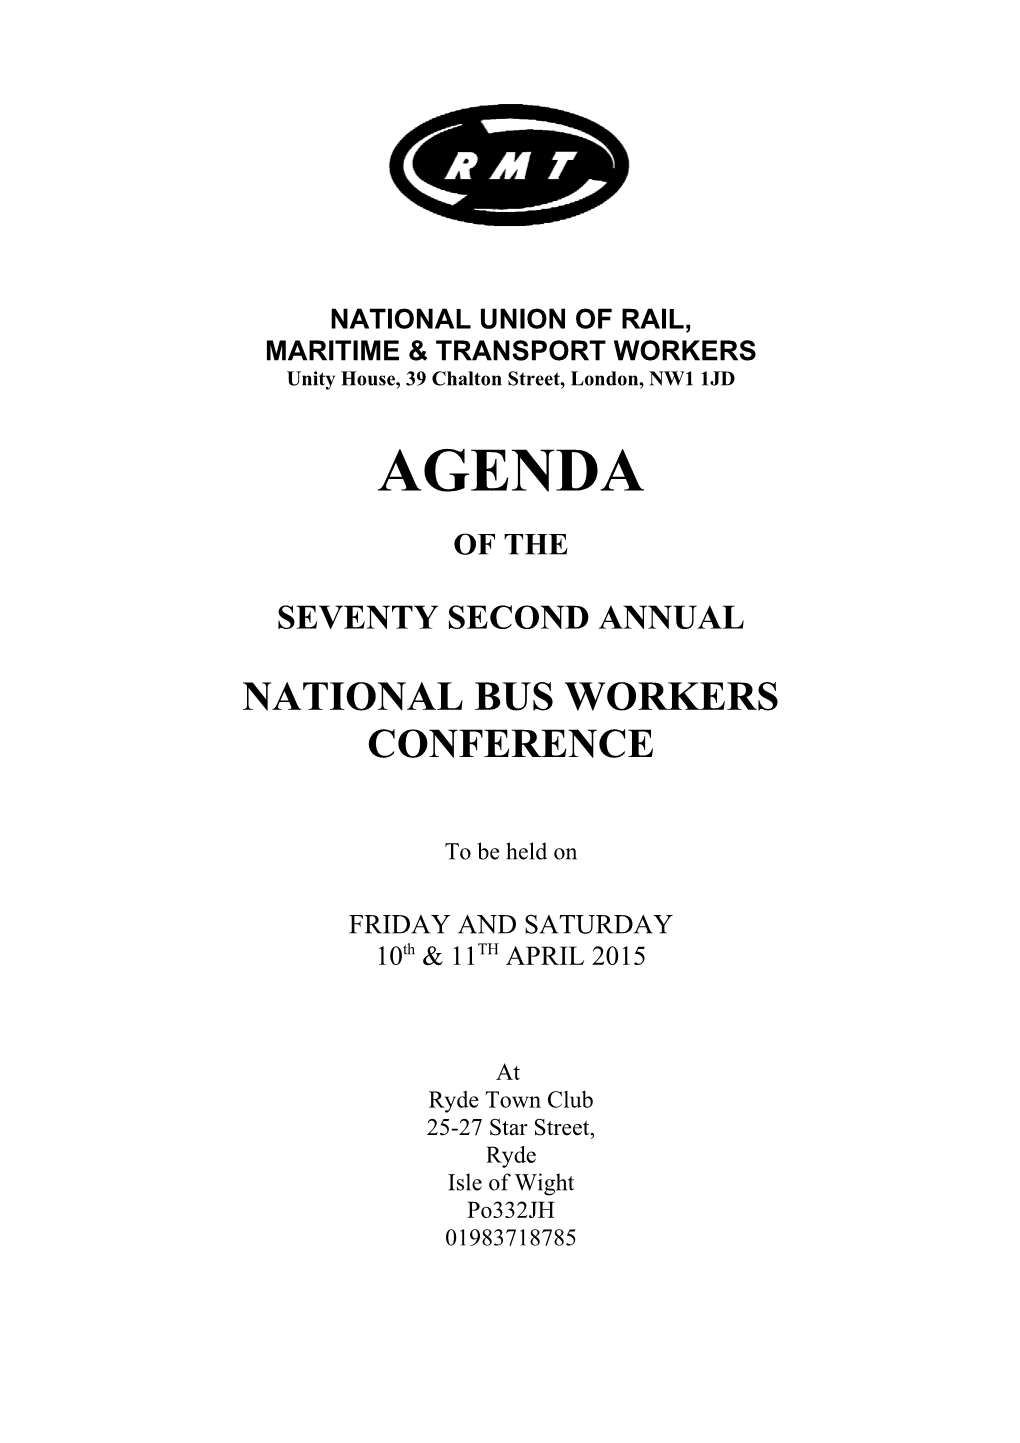 National Union of Rail